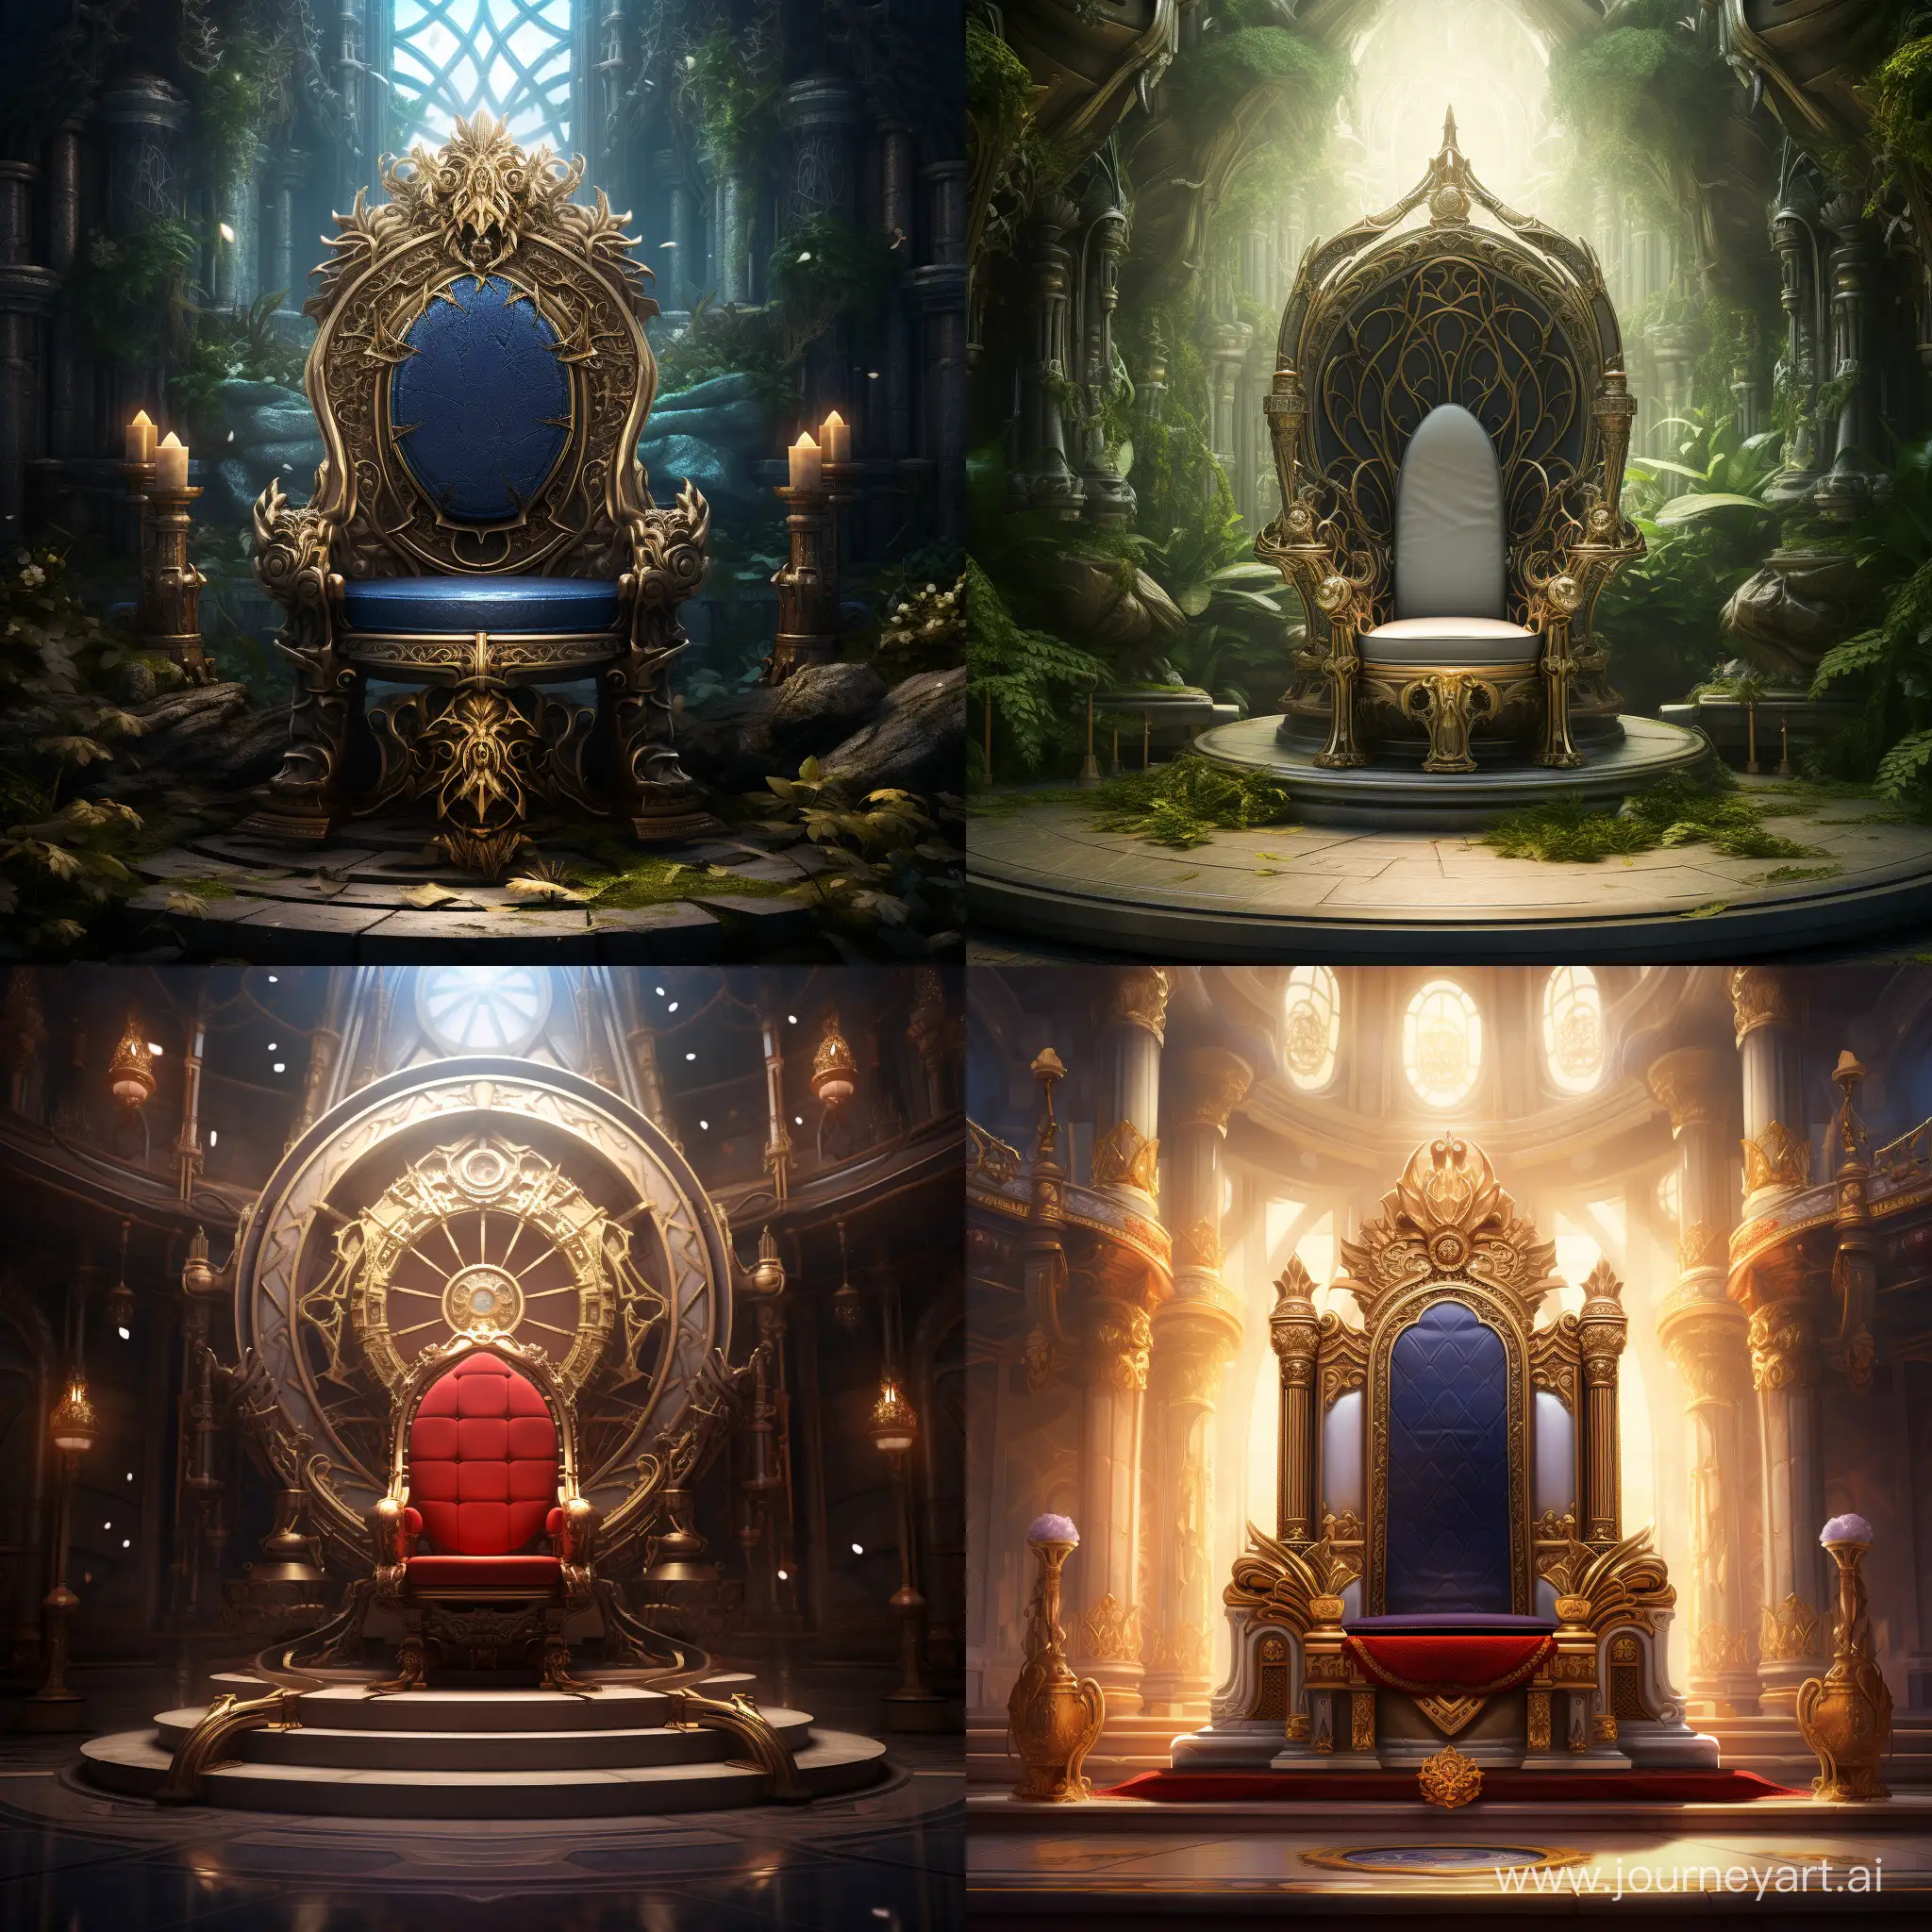 Королевский трон